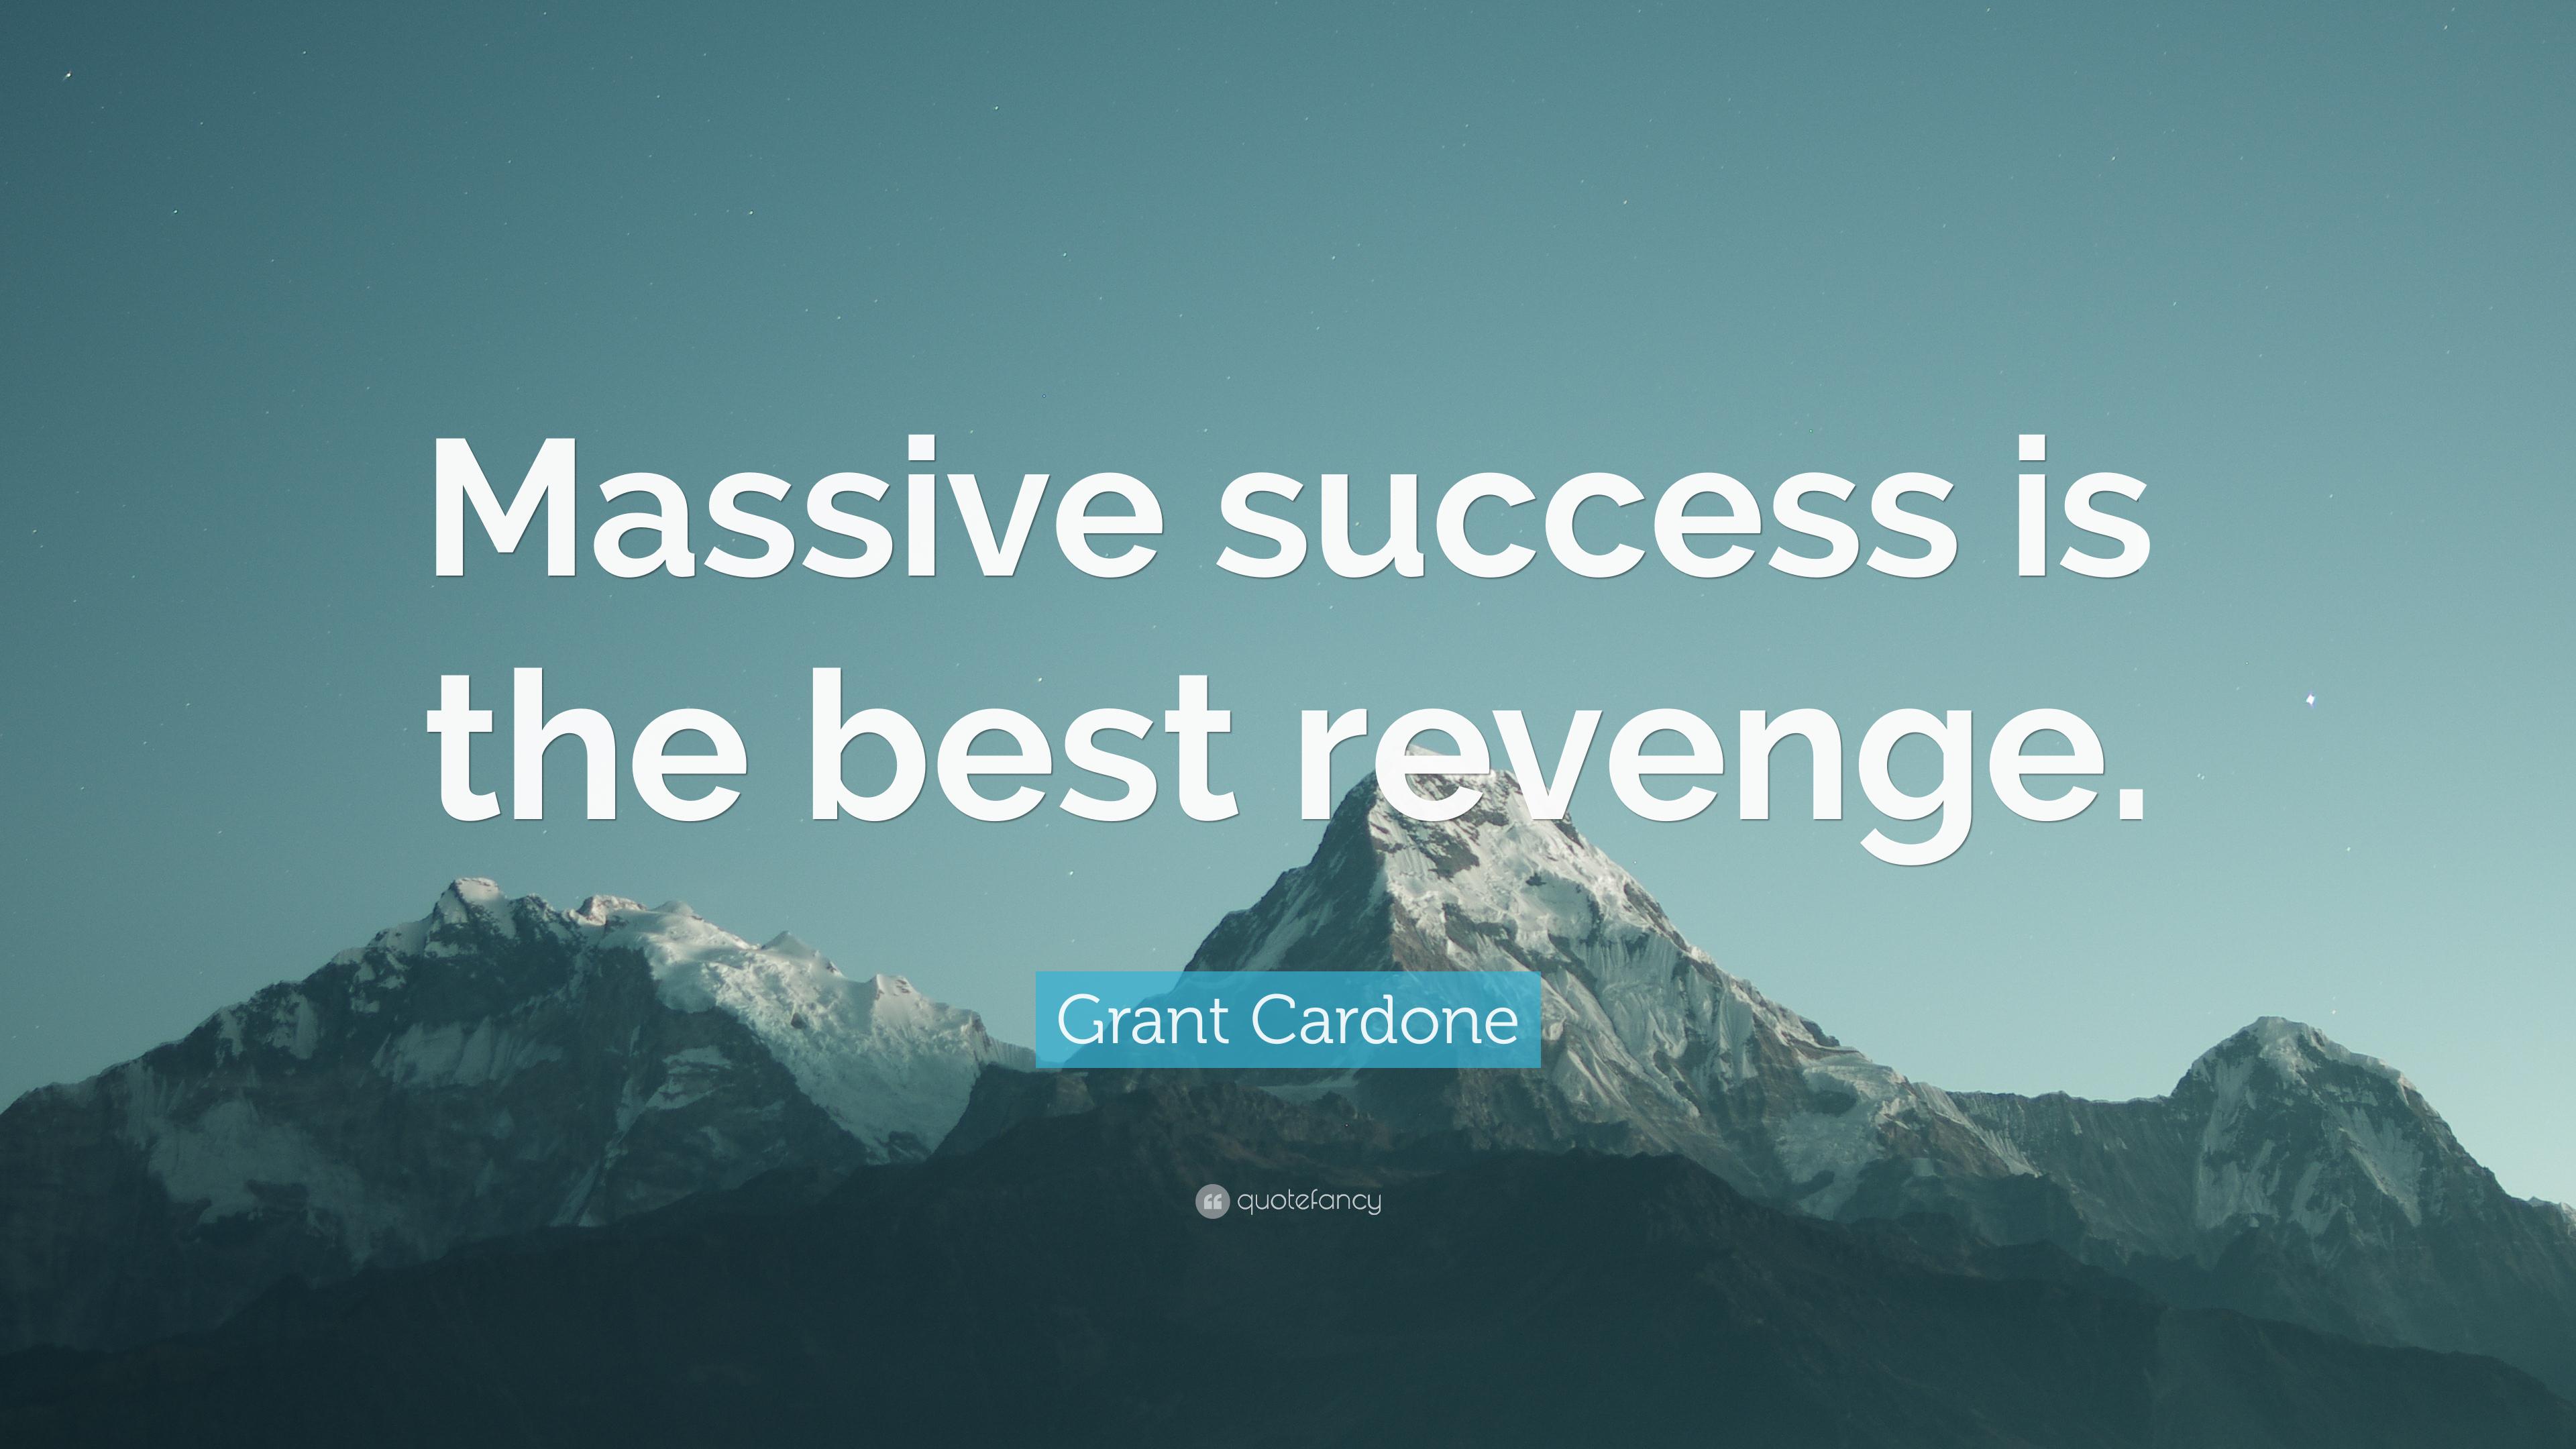 Grant Cardone Quote: “Massive success is the best revenge